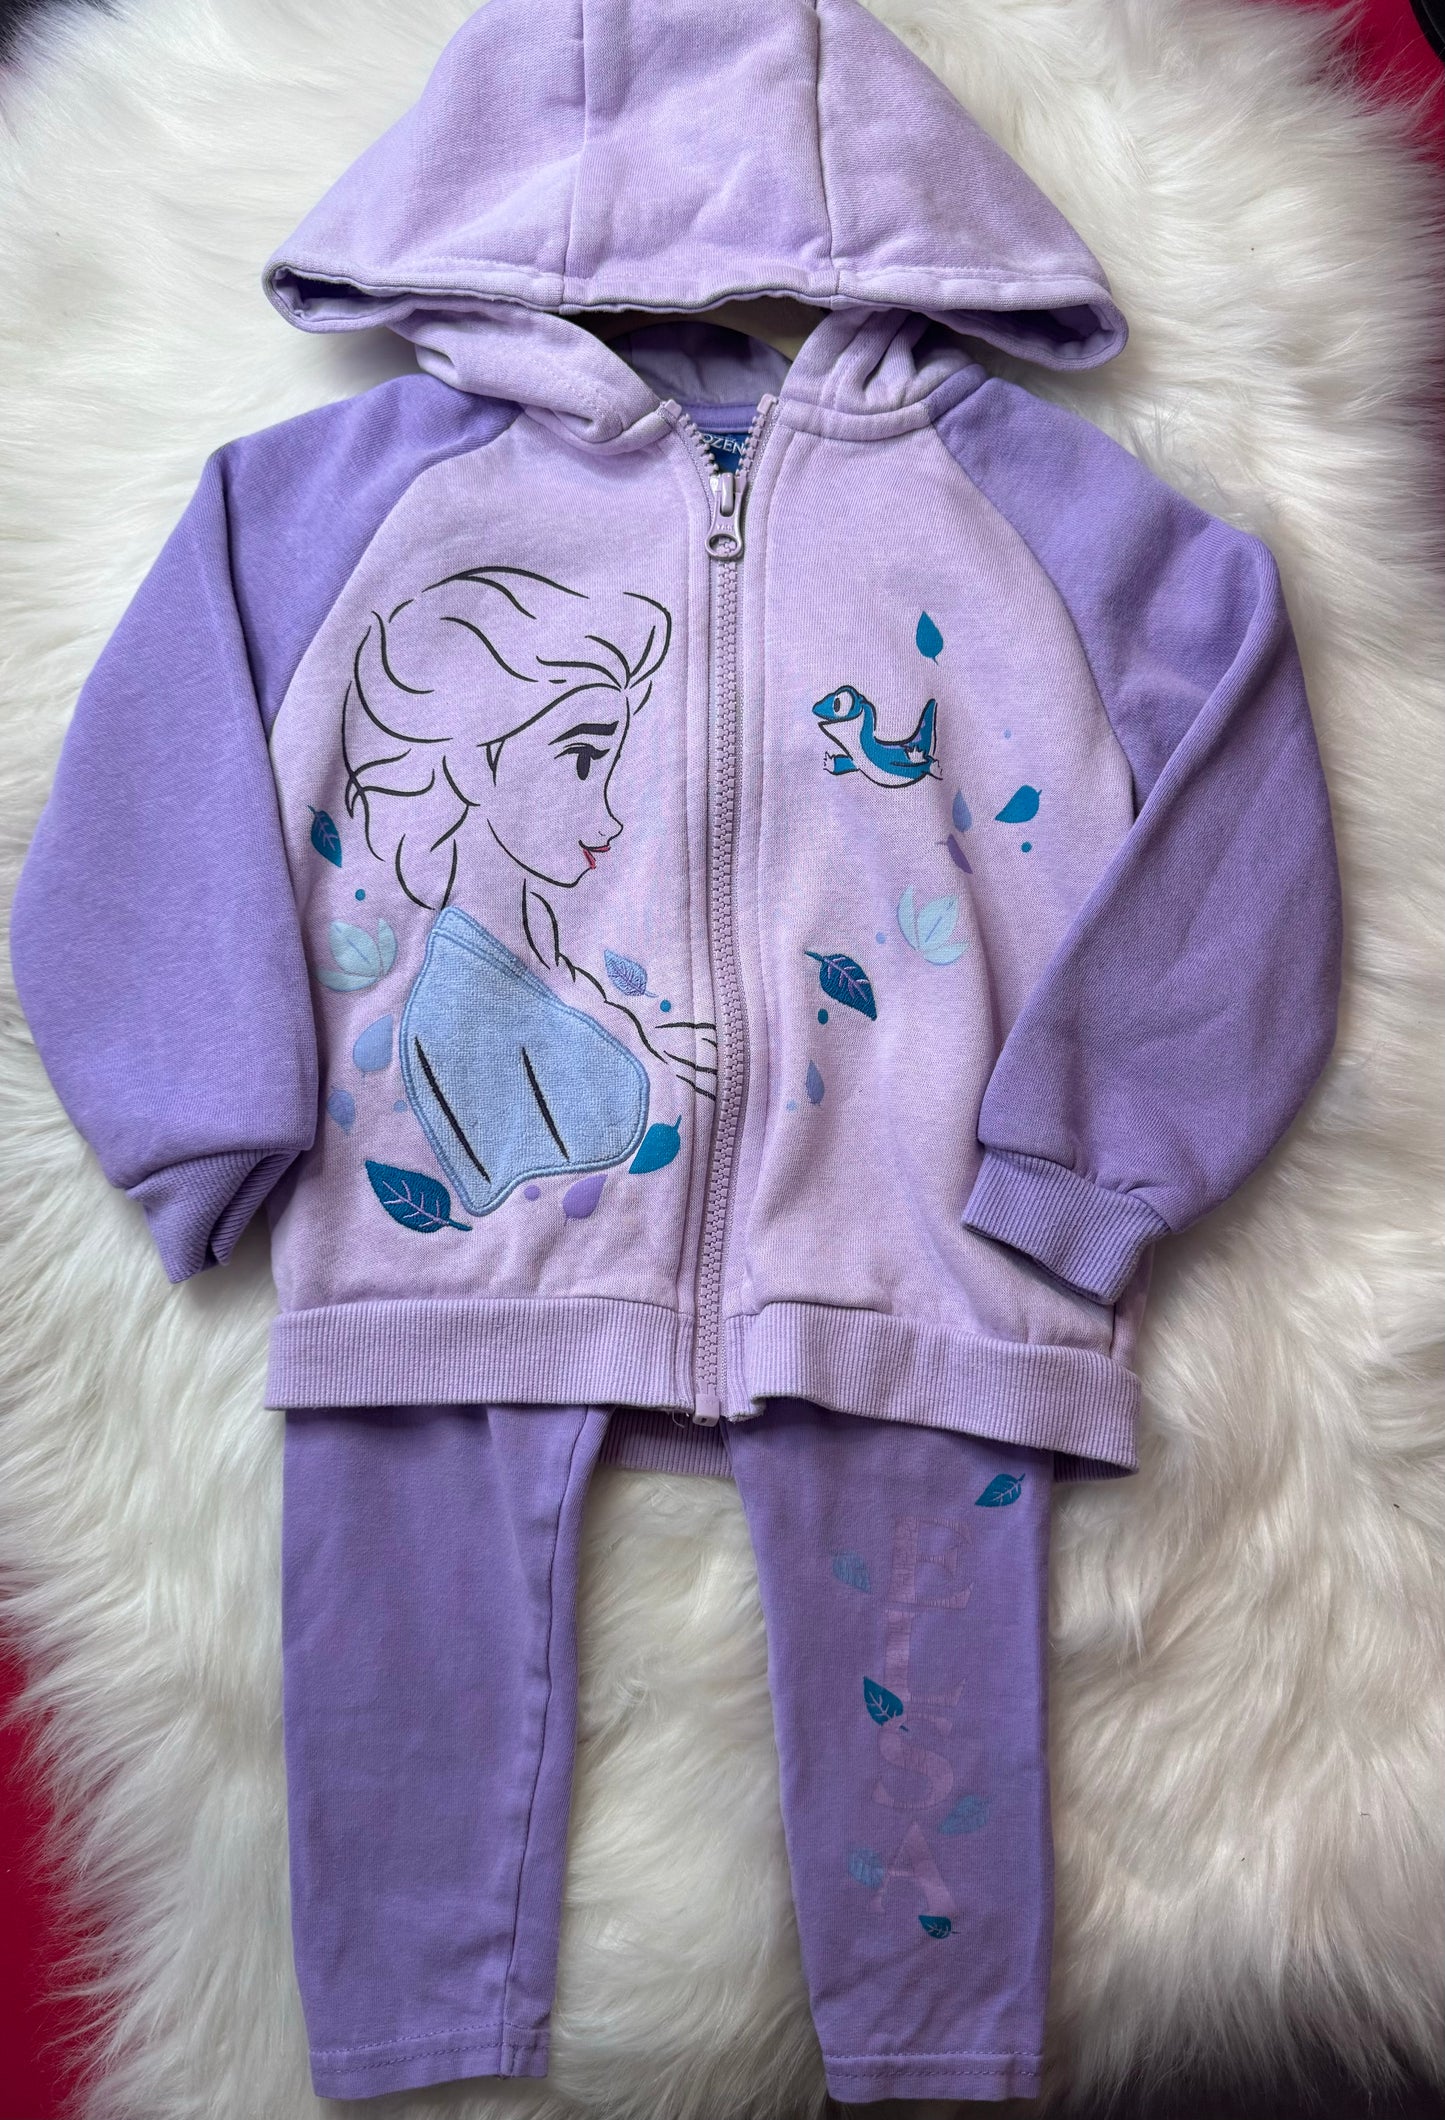 Elsa Outfit - 3T